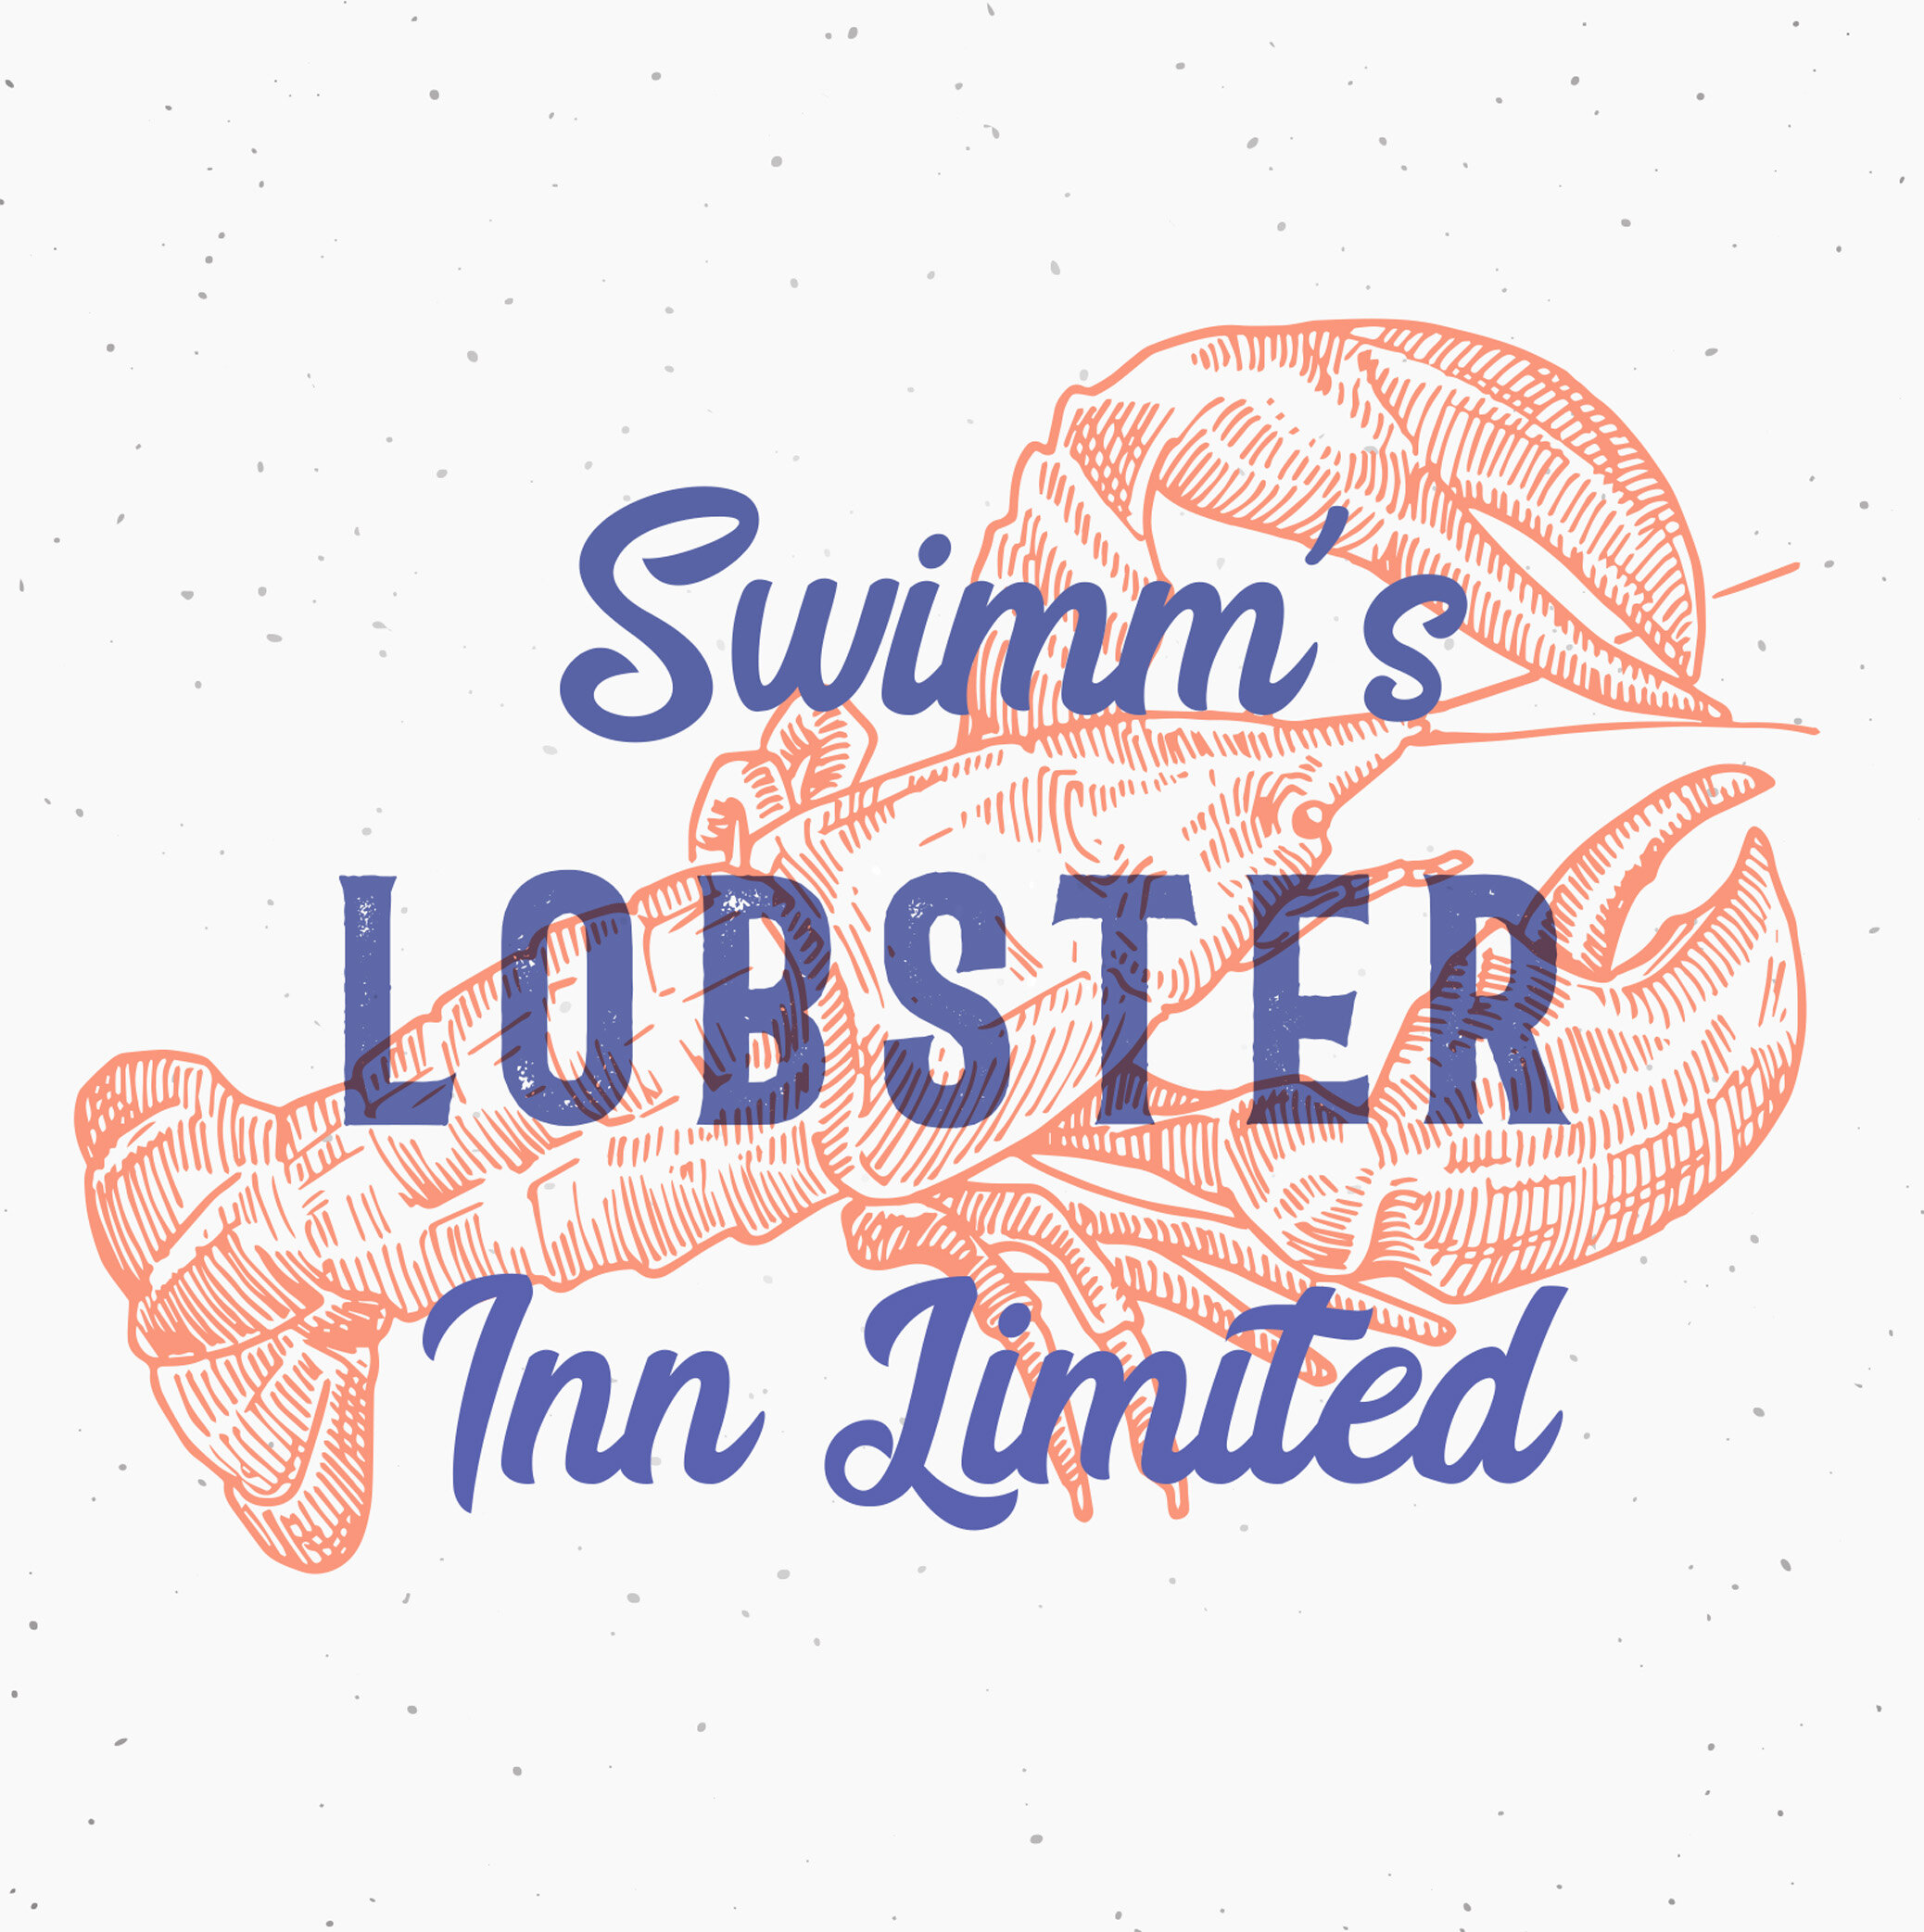 swimms lobster inn.jpg